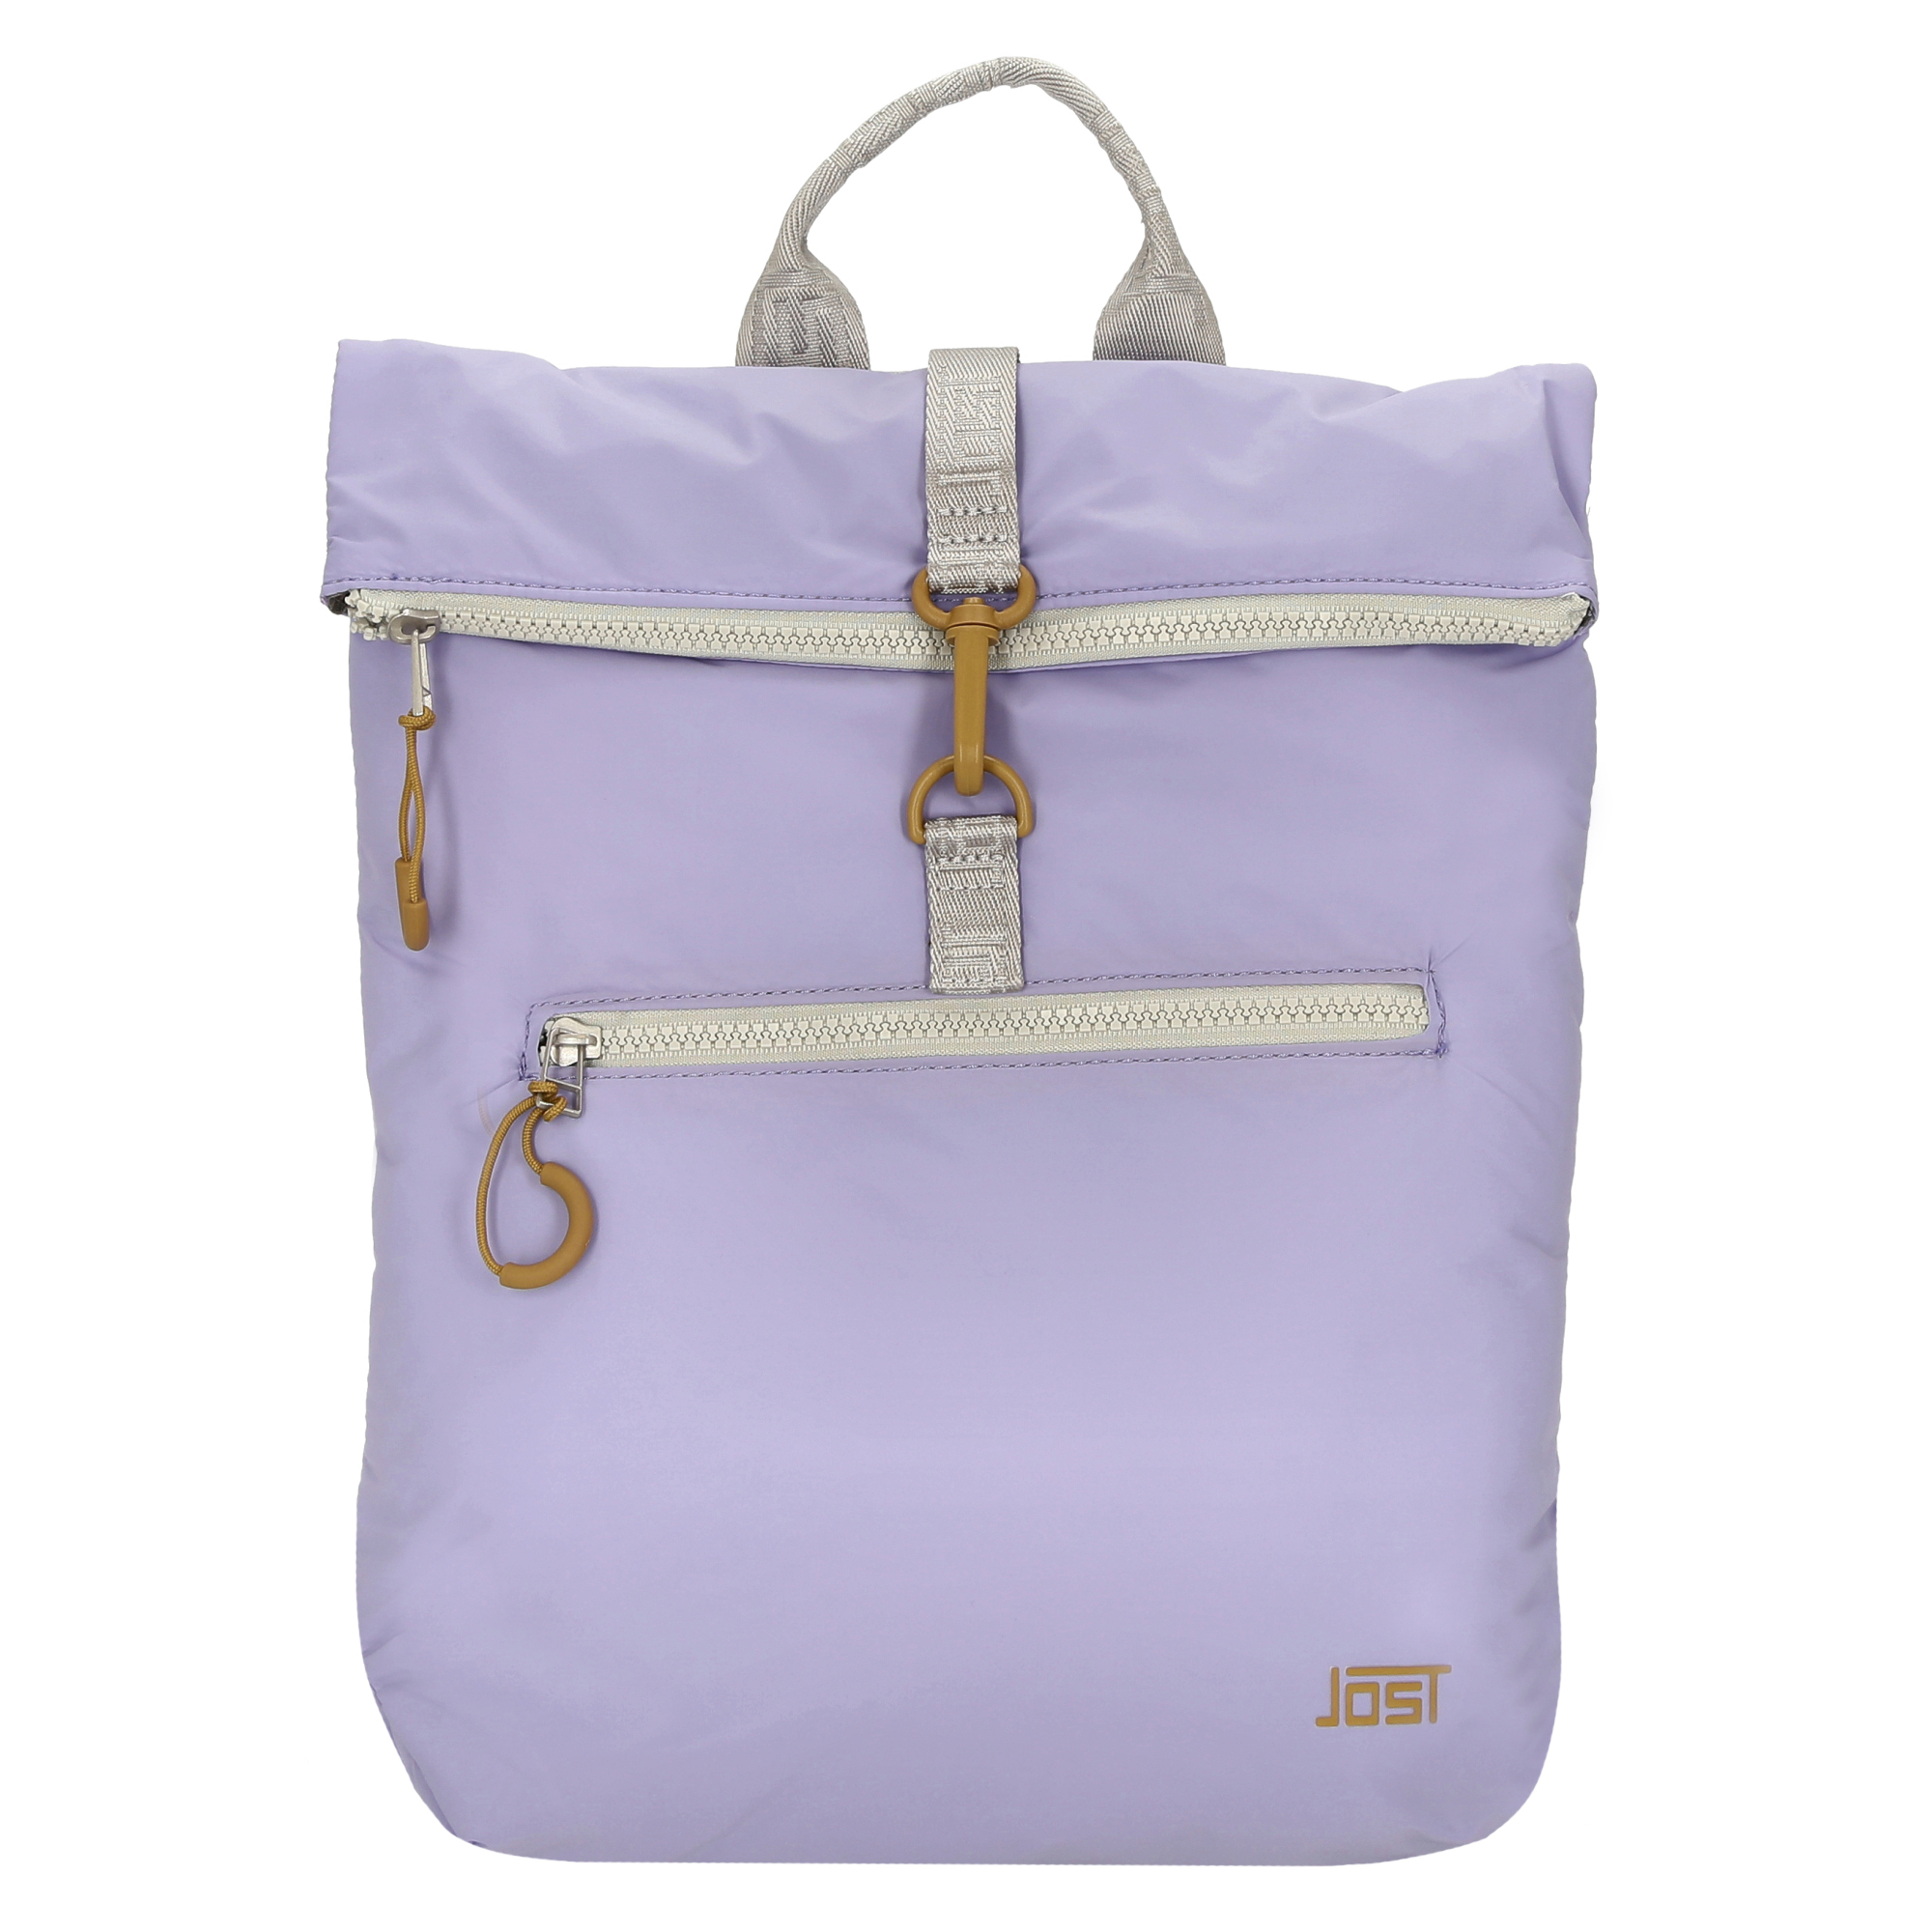 Рюкзак Jost Kemi 35 cm, цвет lilac